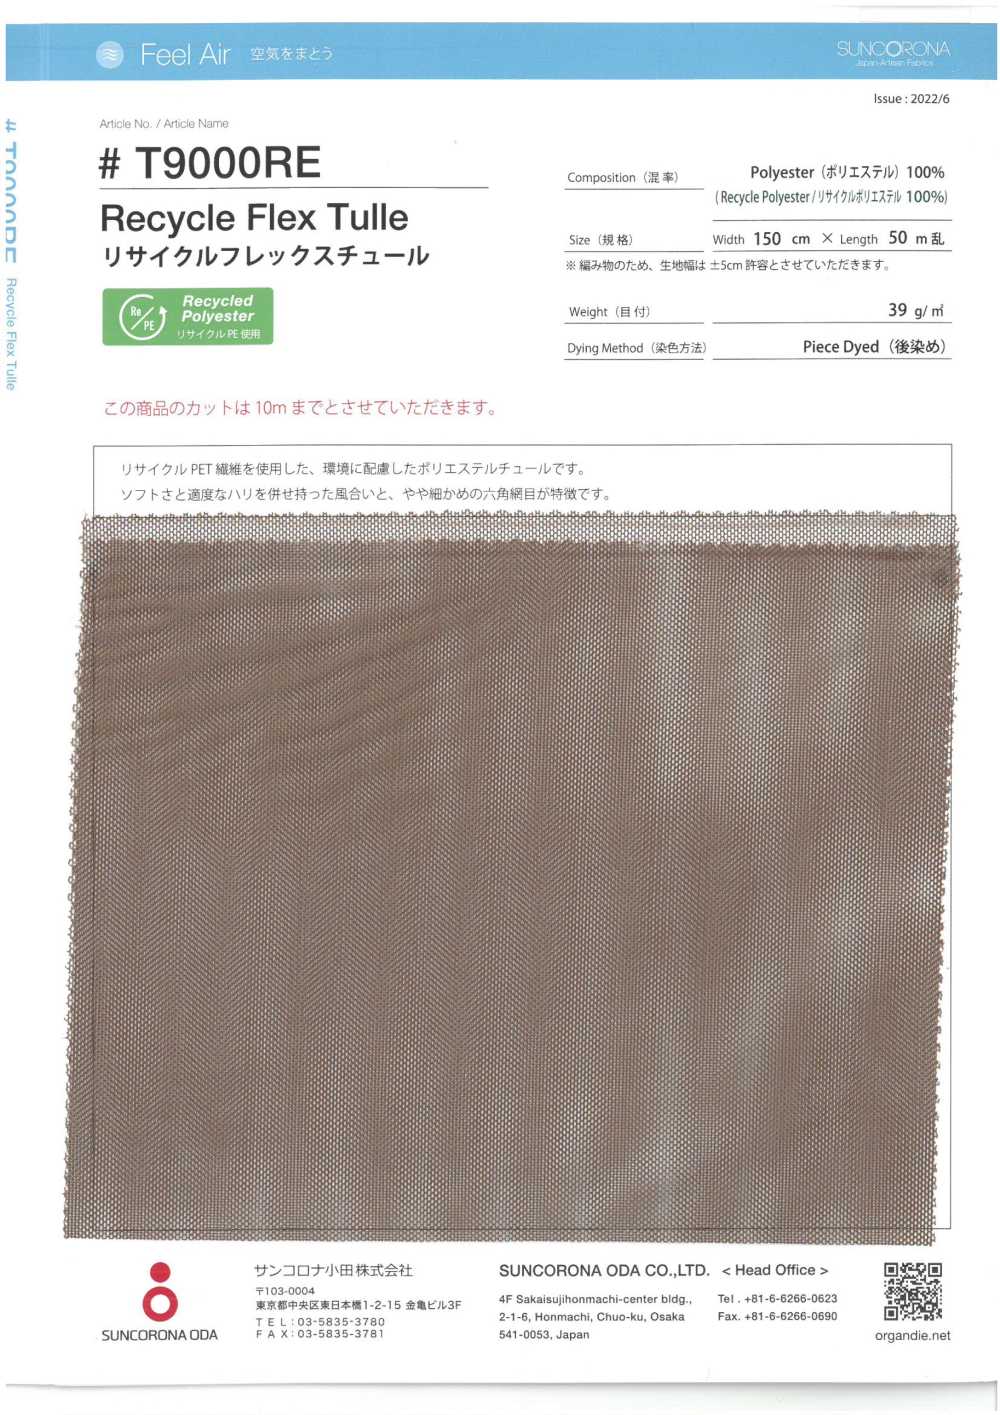 T9000RE Recycled Flex Tulle[Textile / Fabric] Suncorona Oda